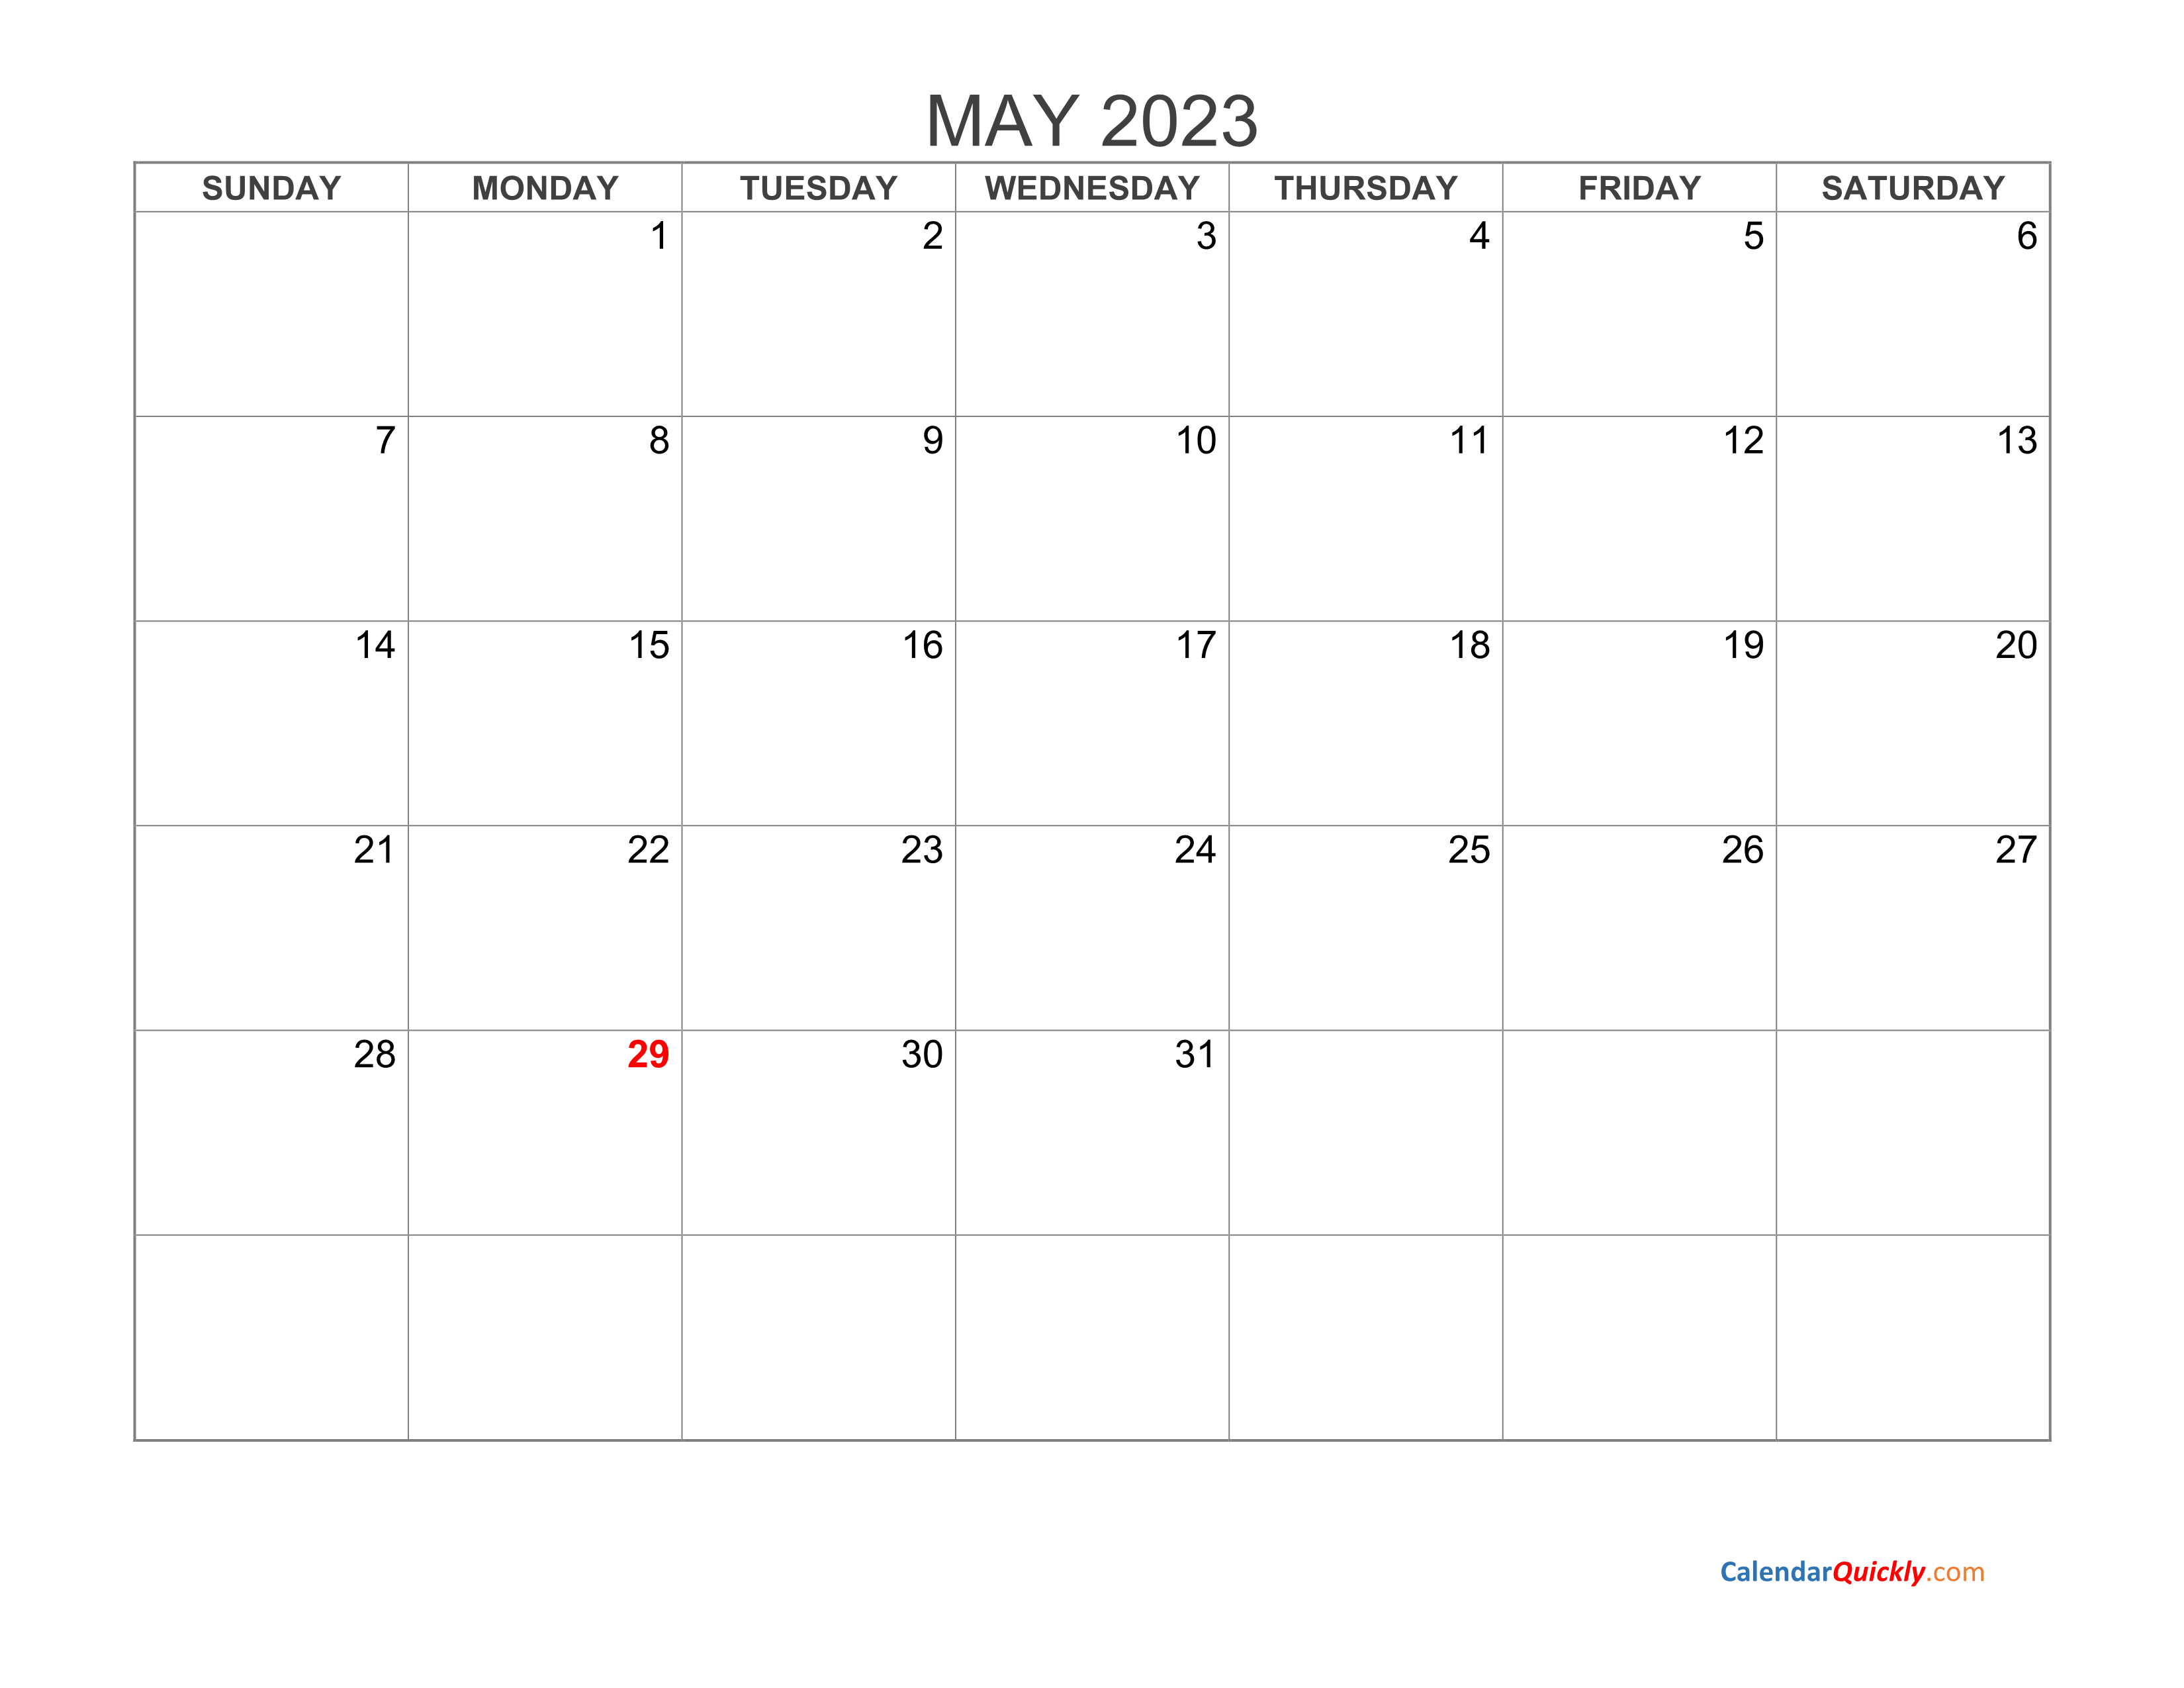 may-2023-blank-calendar-calendar-quickly